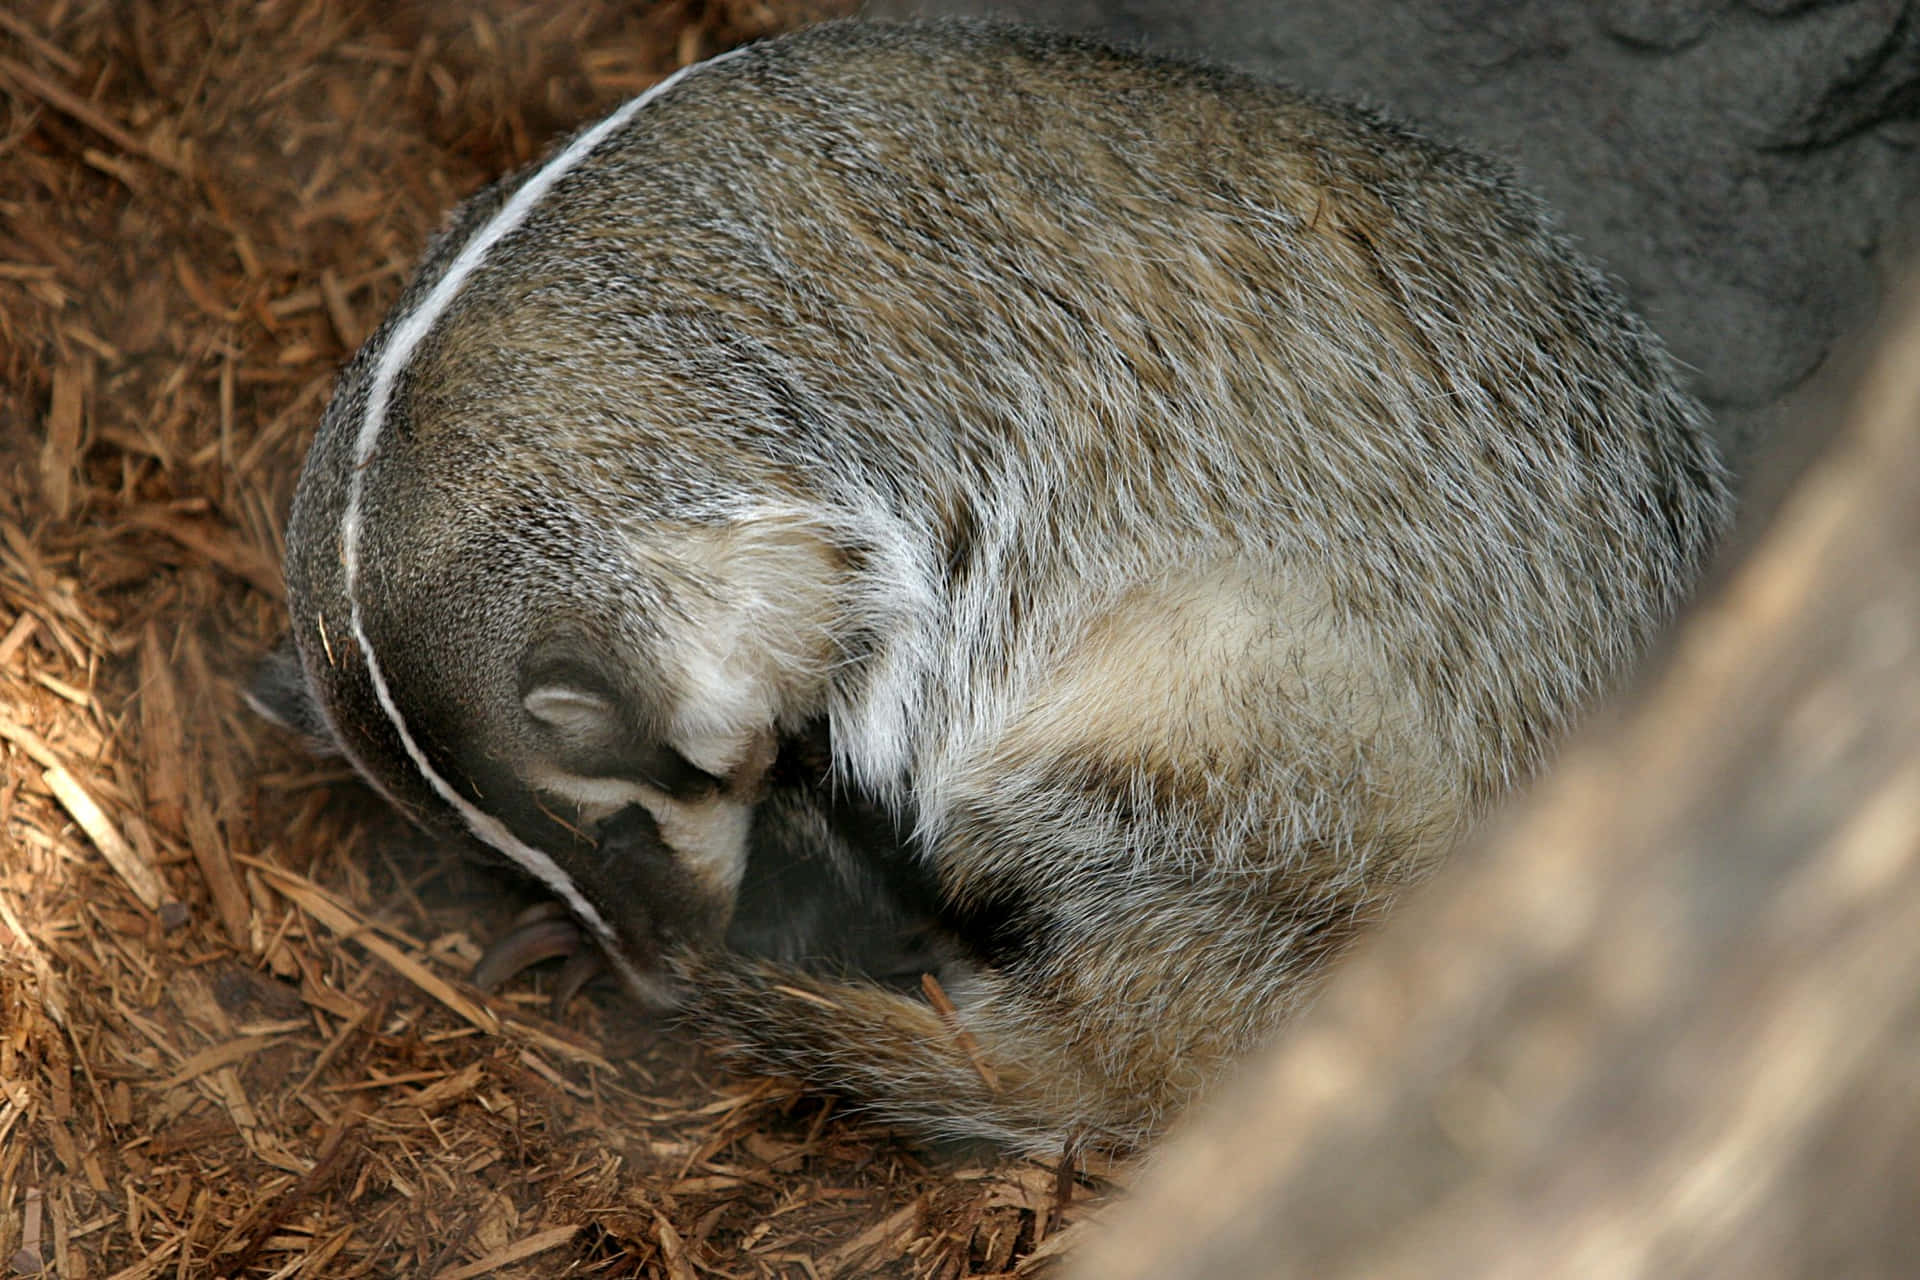 A bear sleeping peacefully in its cozy den during hibernation Wallpaper